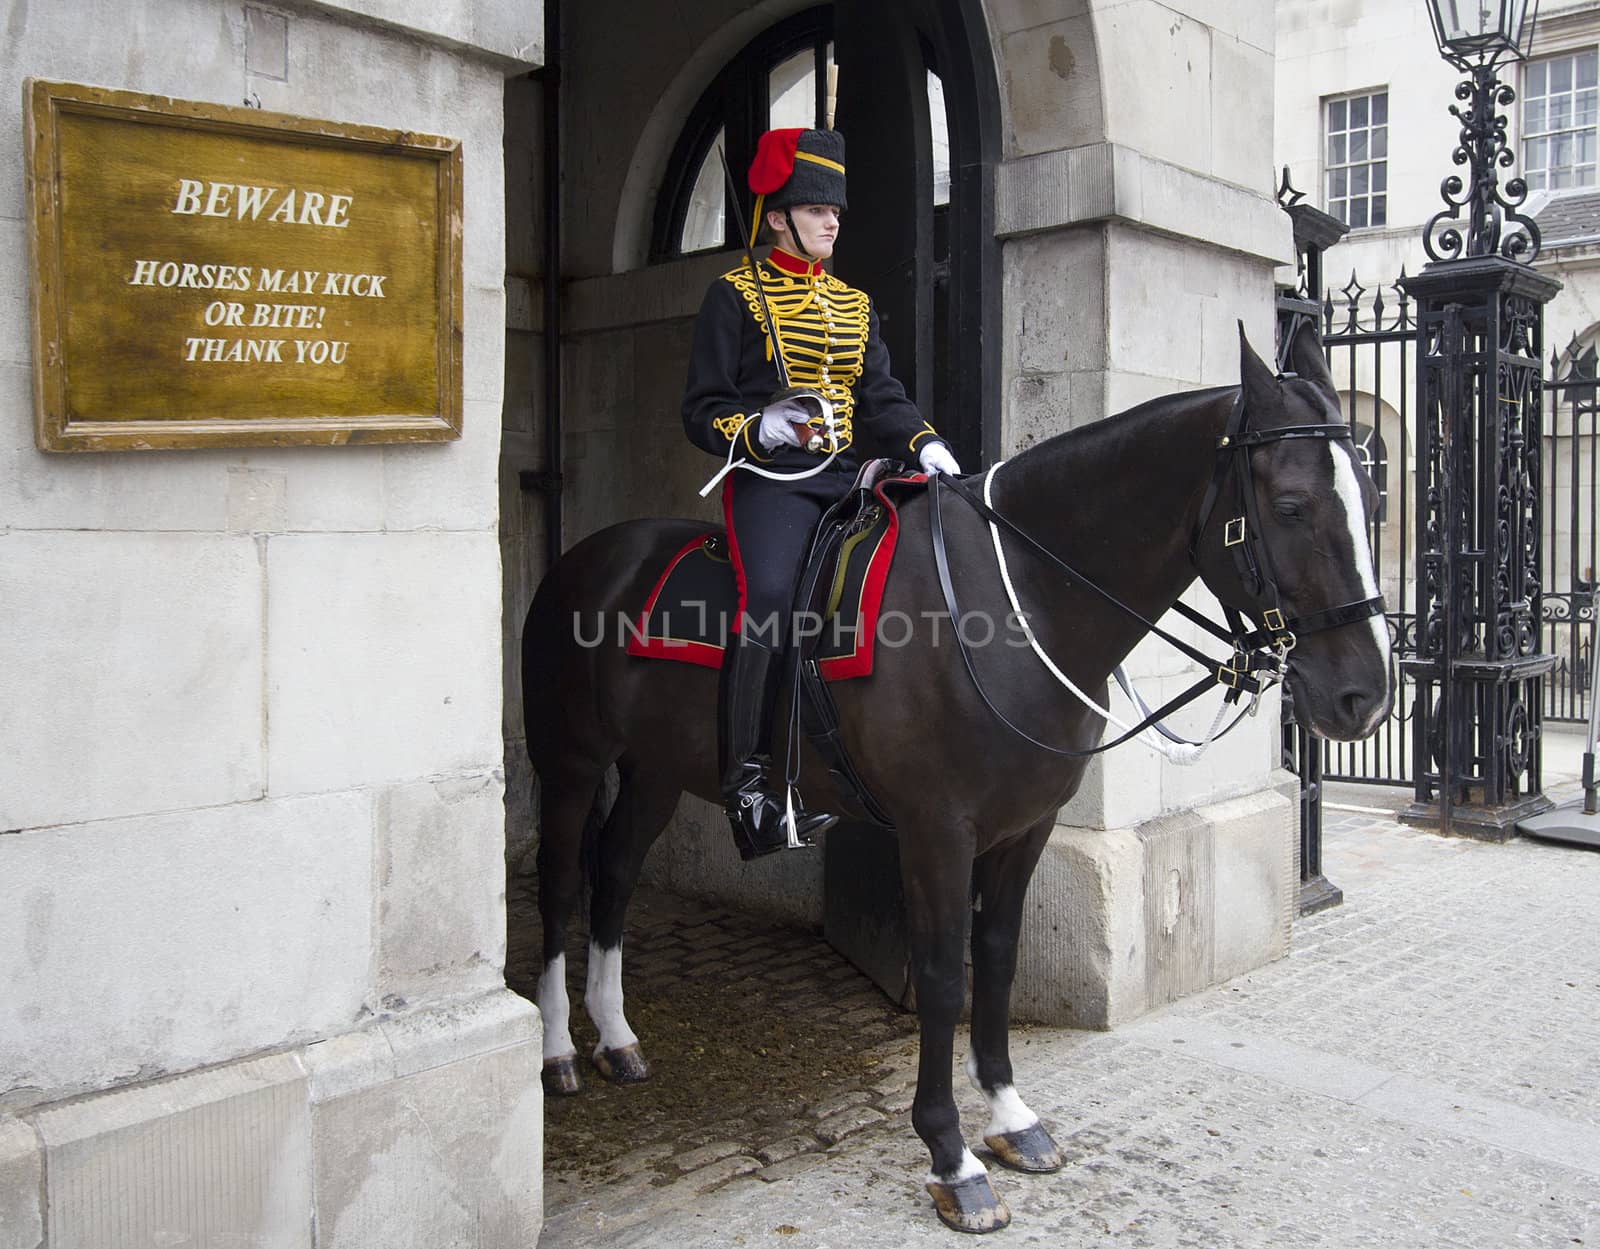 London, UK - July 21, 2011: Female Horse Guard on duty at Whitehall on July 21, 2011 in London, UK.